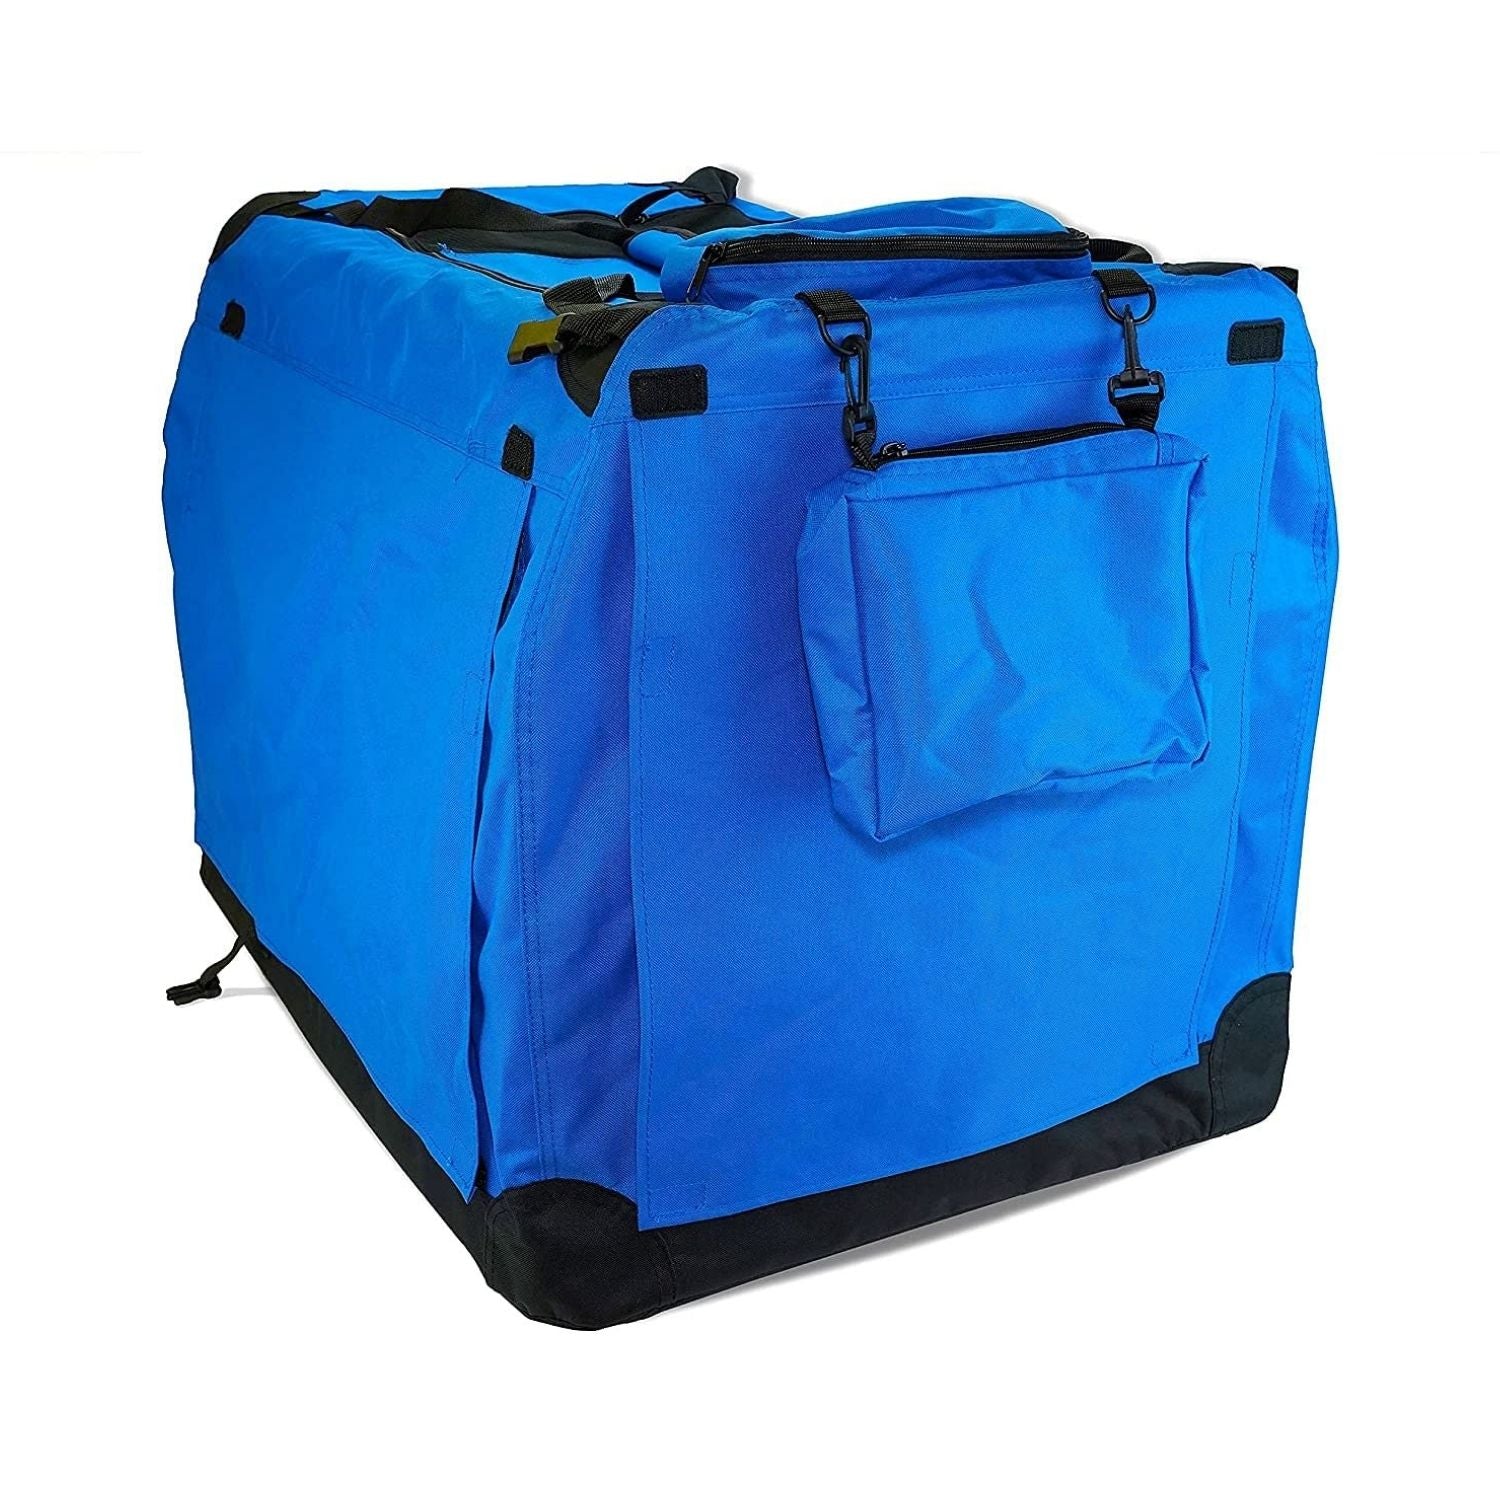 FLOOFI Portable Pet Carrier-Model 1-XL Size (Blue) FI-PC-147-KPT - SILBERSHELL